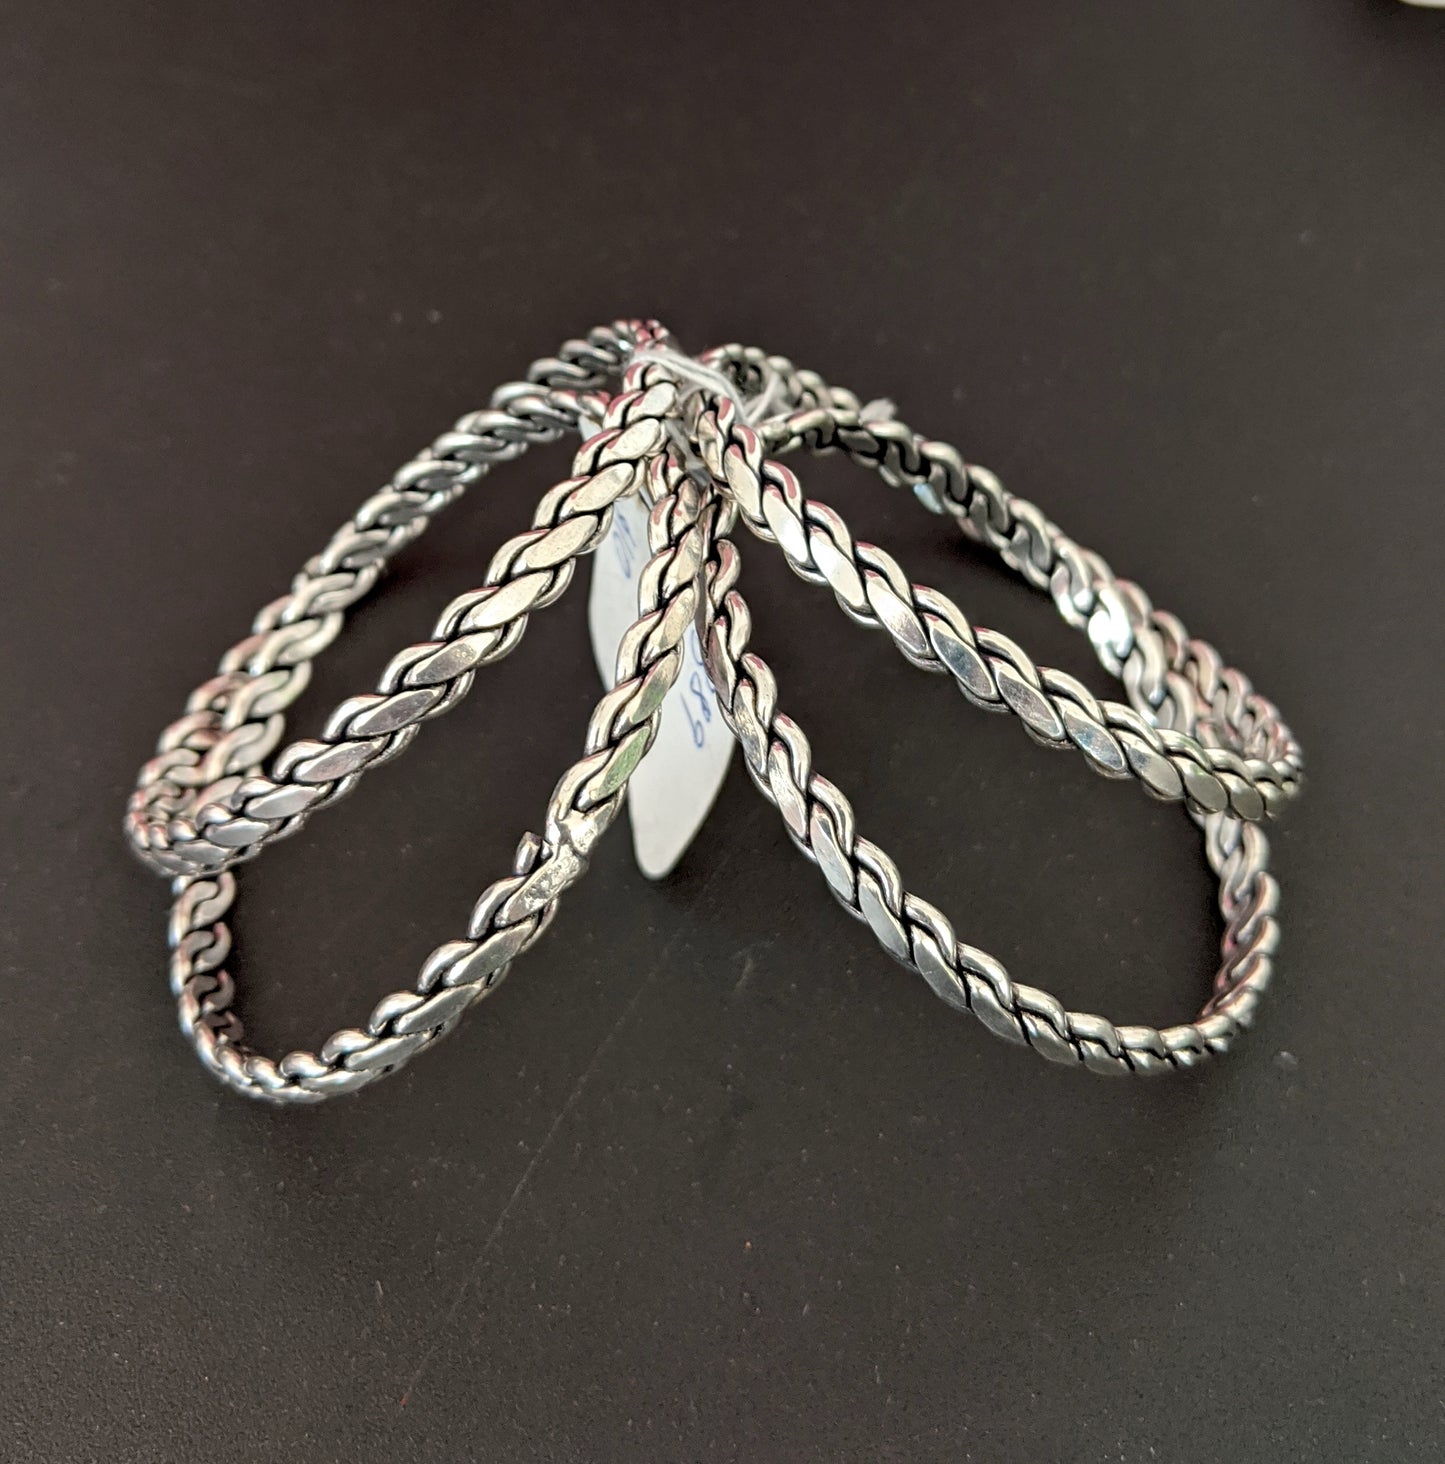 Spiral design oxidized silver bangles - Set of 4